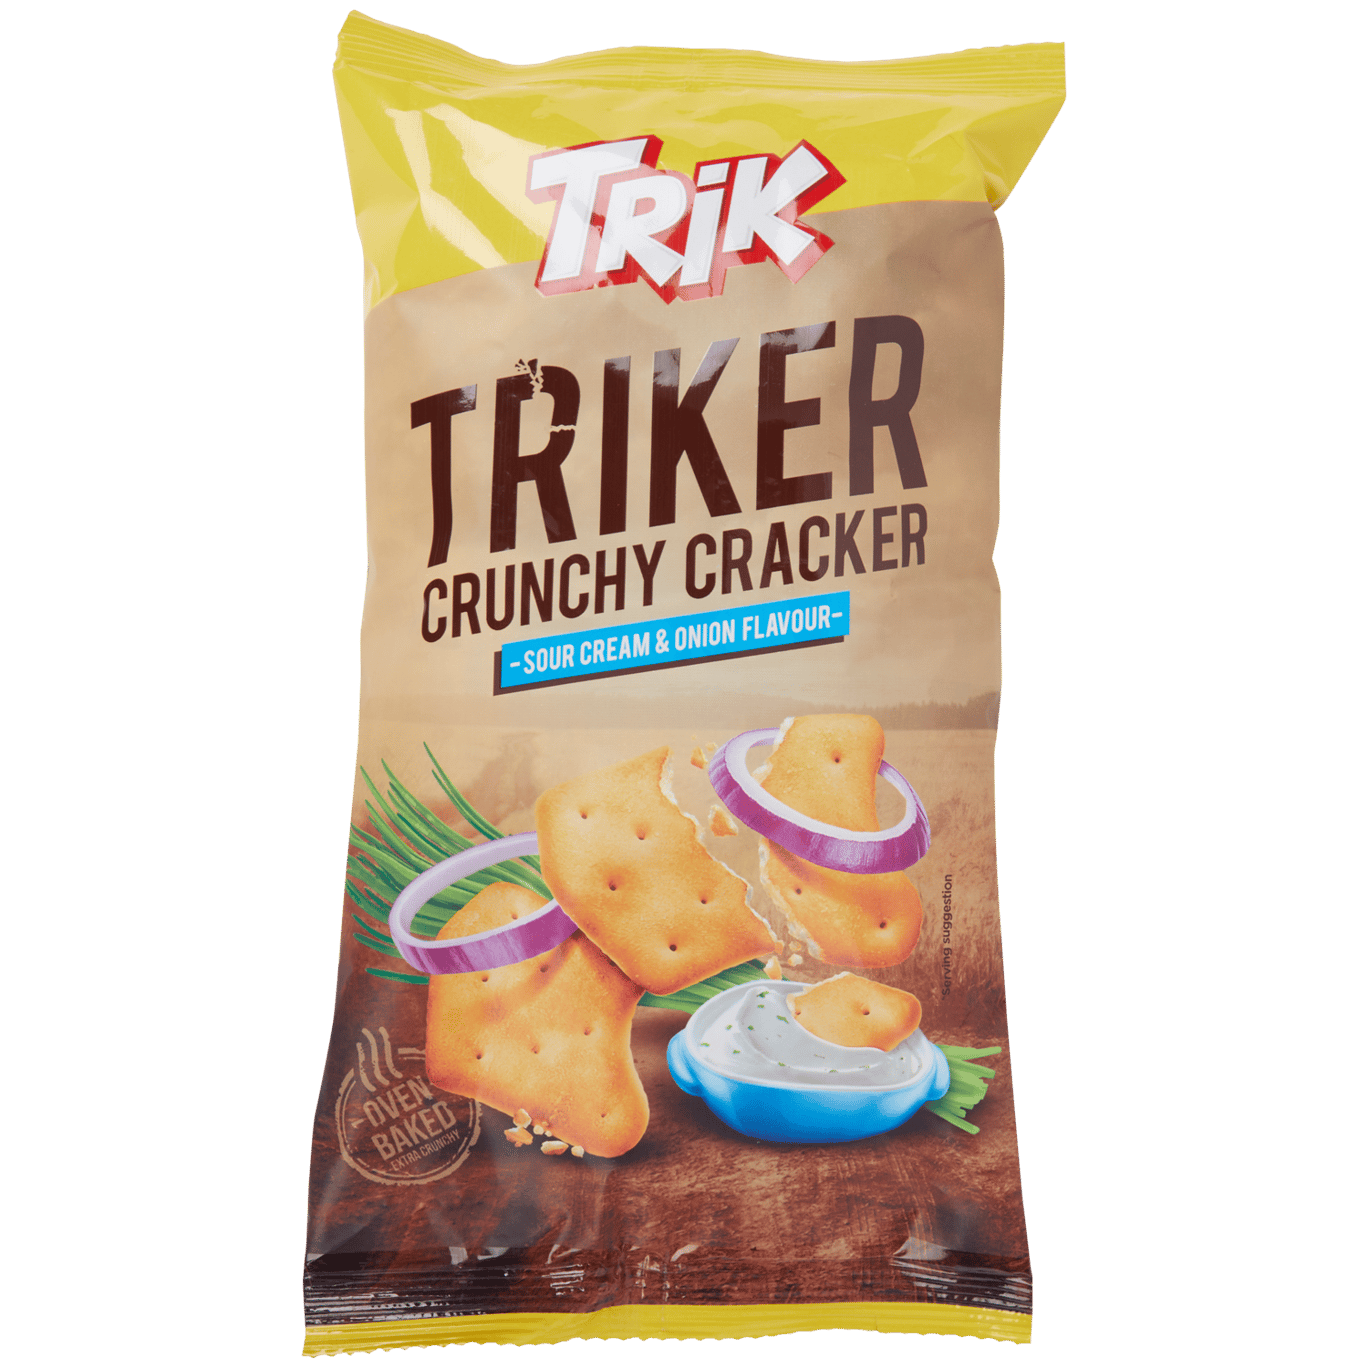 Triker Crunchy Cracker Trik Sour Cream & Onion